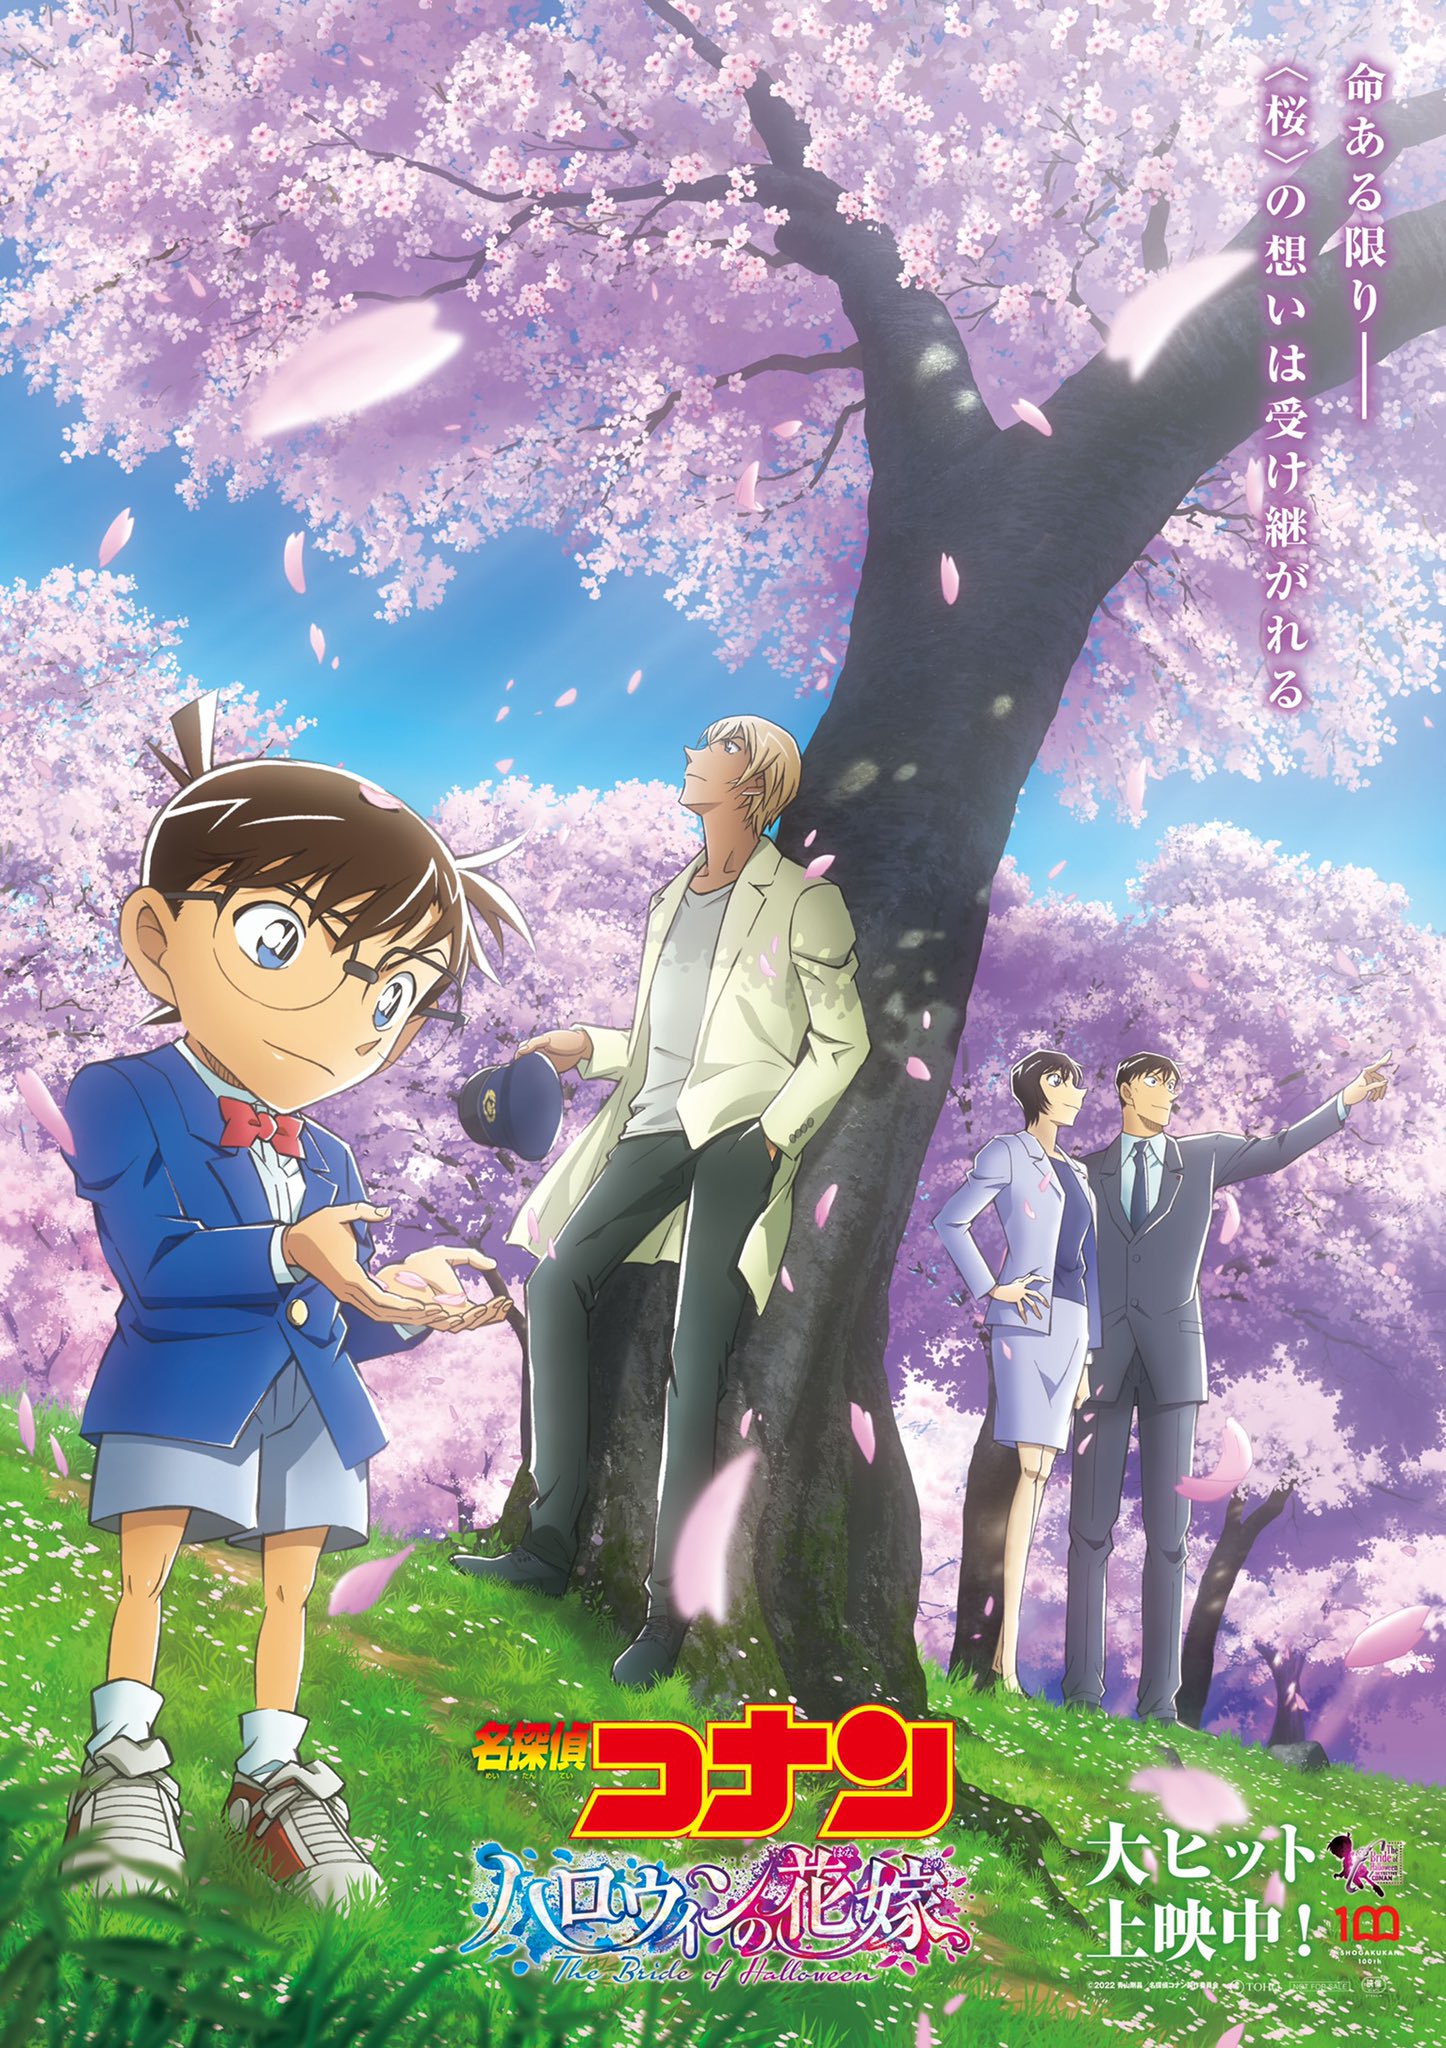 Detective Conan: The Bride of Helloween cherry blossom visual